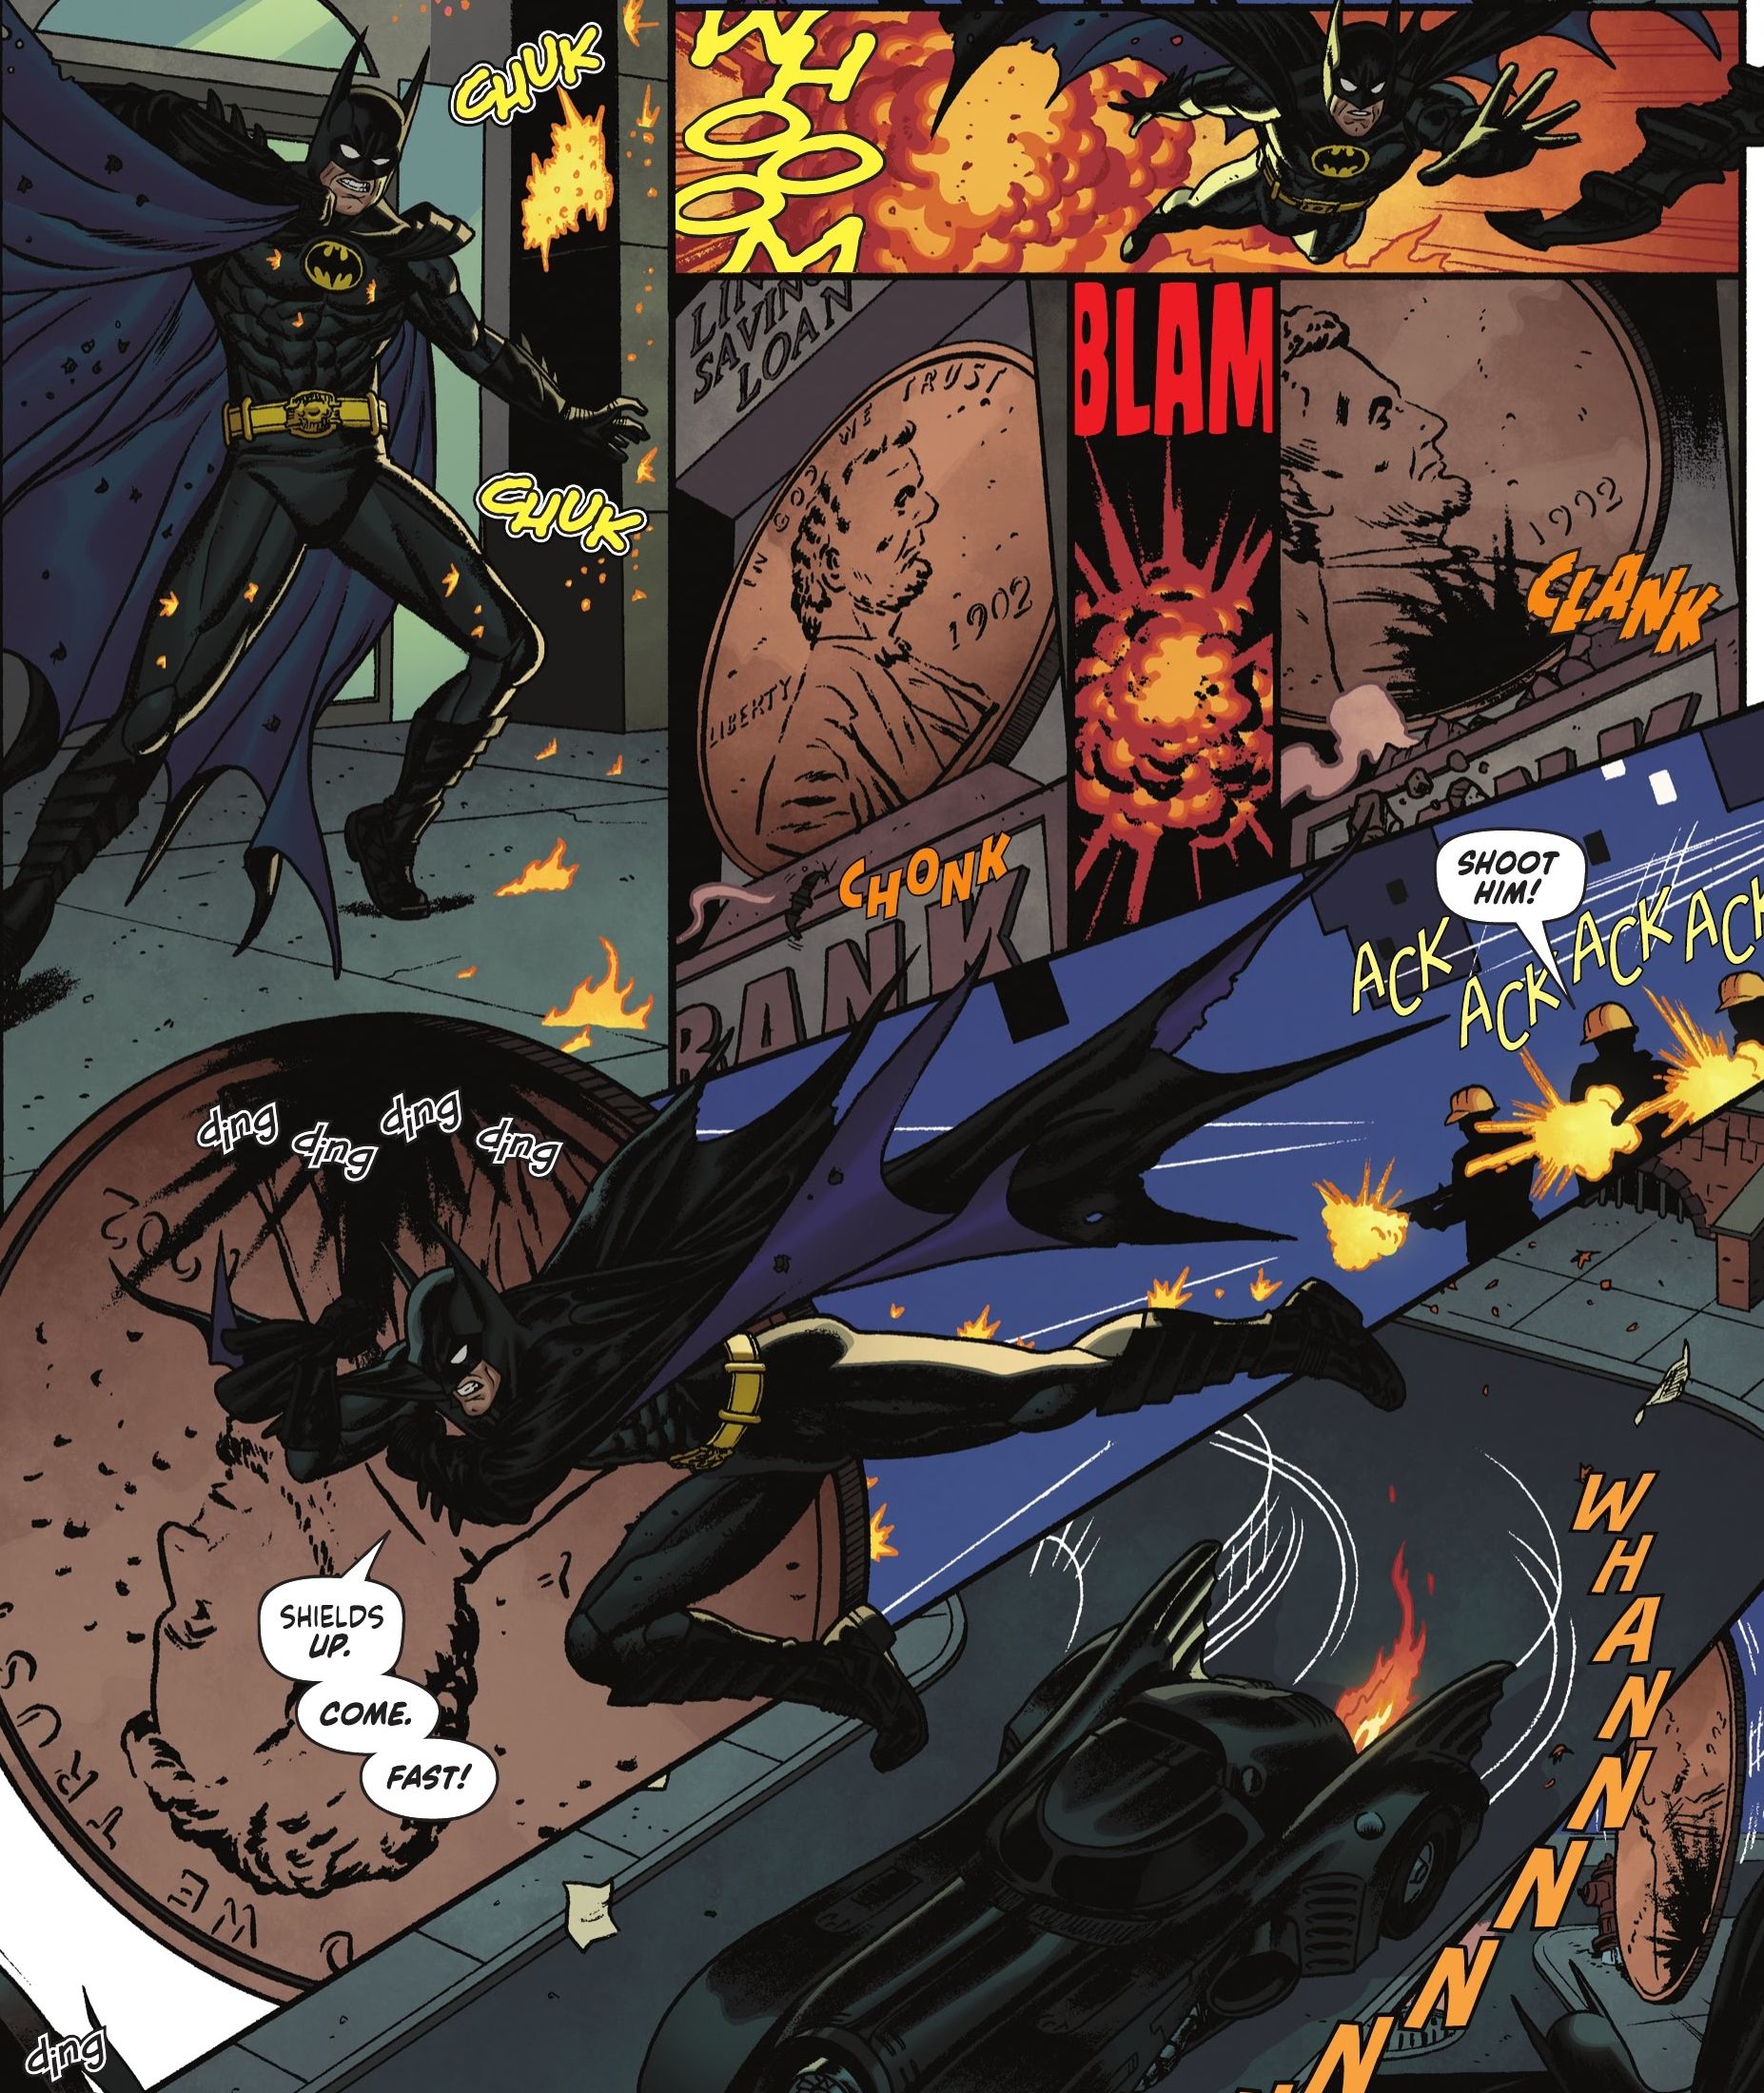 Batman uses the giant penny as a shield in Batman '89 #1